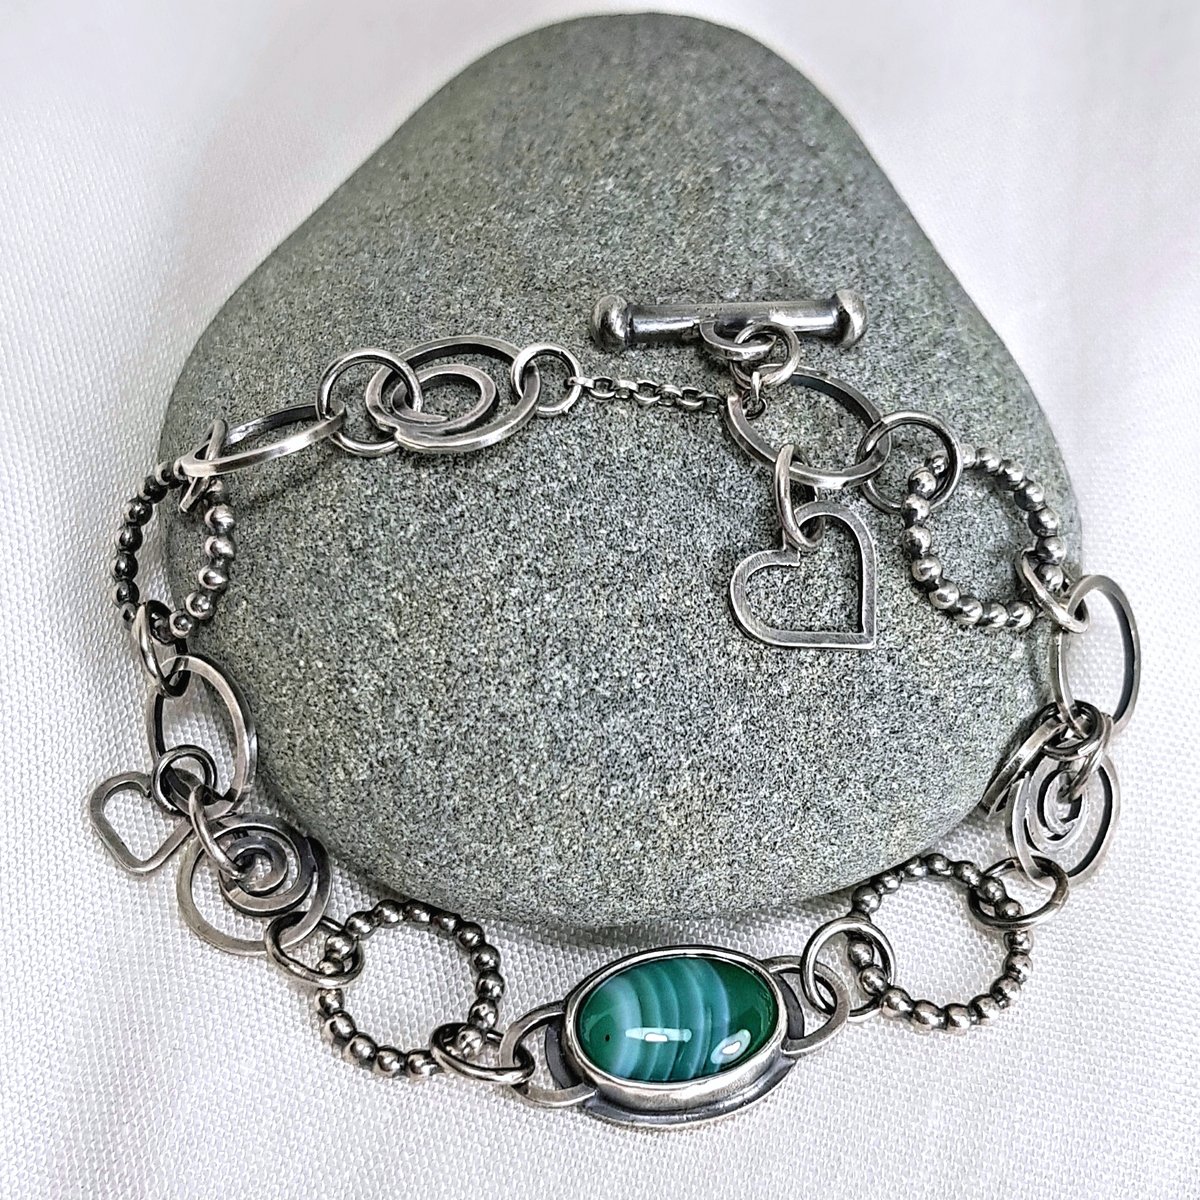 Image of Sterling Silver Charm Bracelet, Oxidised Silver Bracelet with Green Agate Gemstone